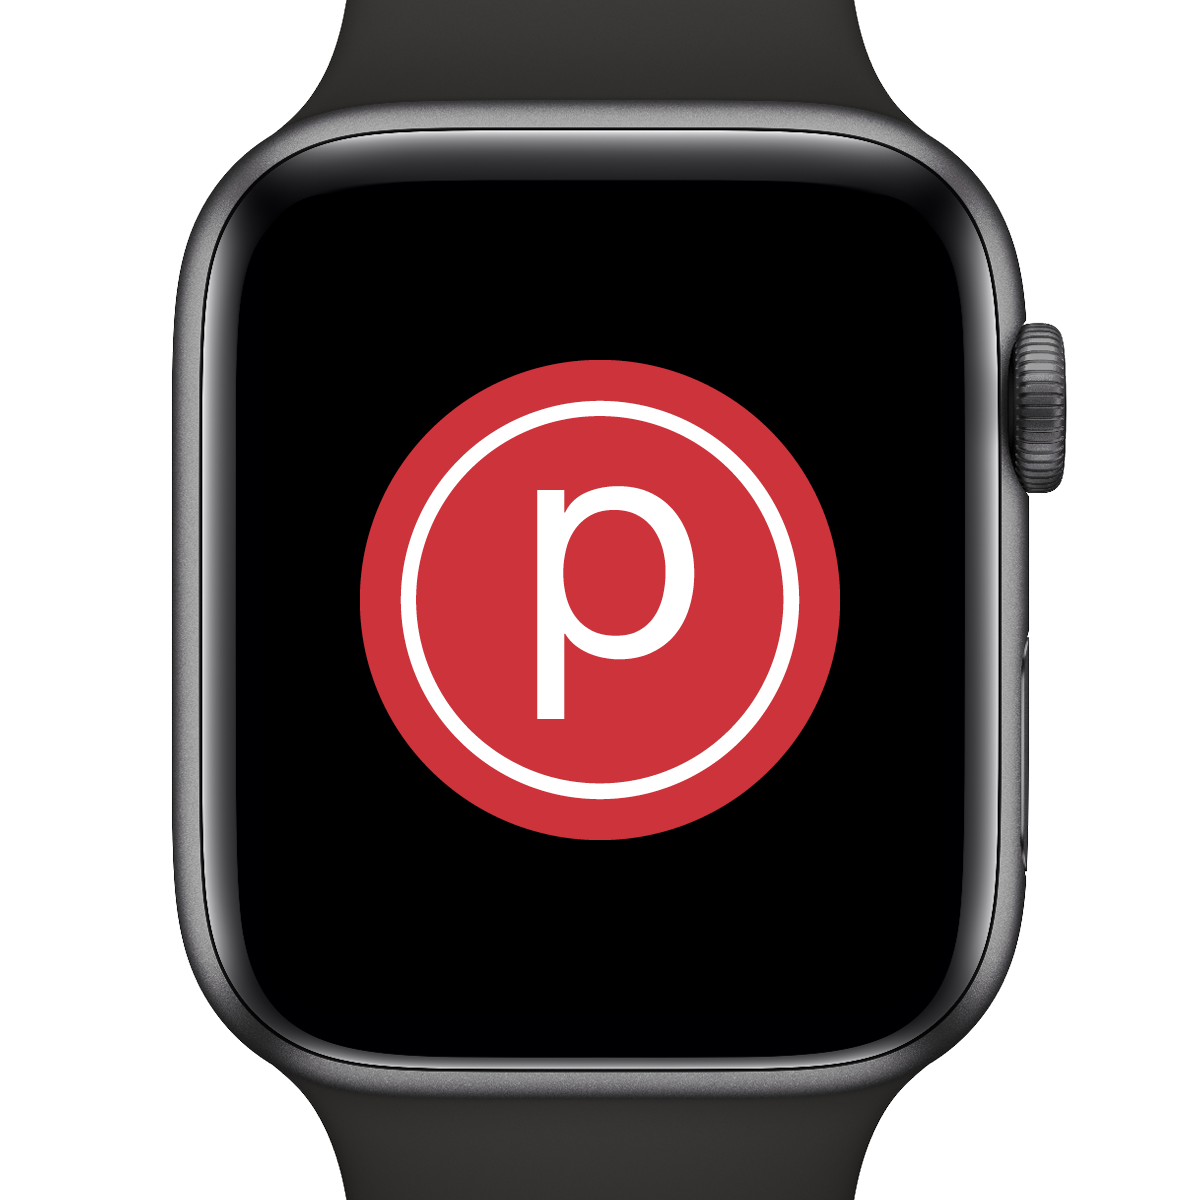 Apple Watch displaying Pure Barre logo